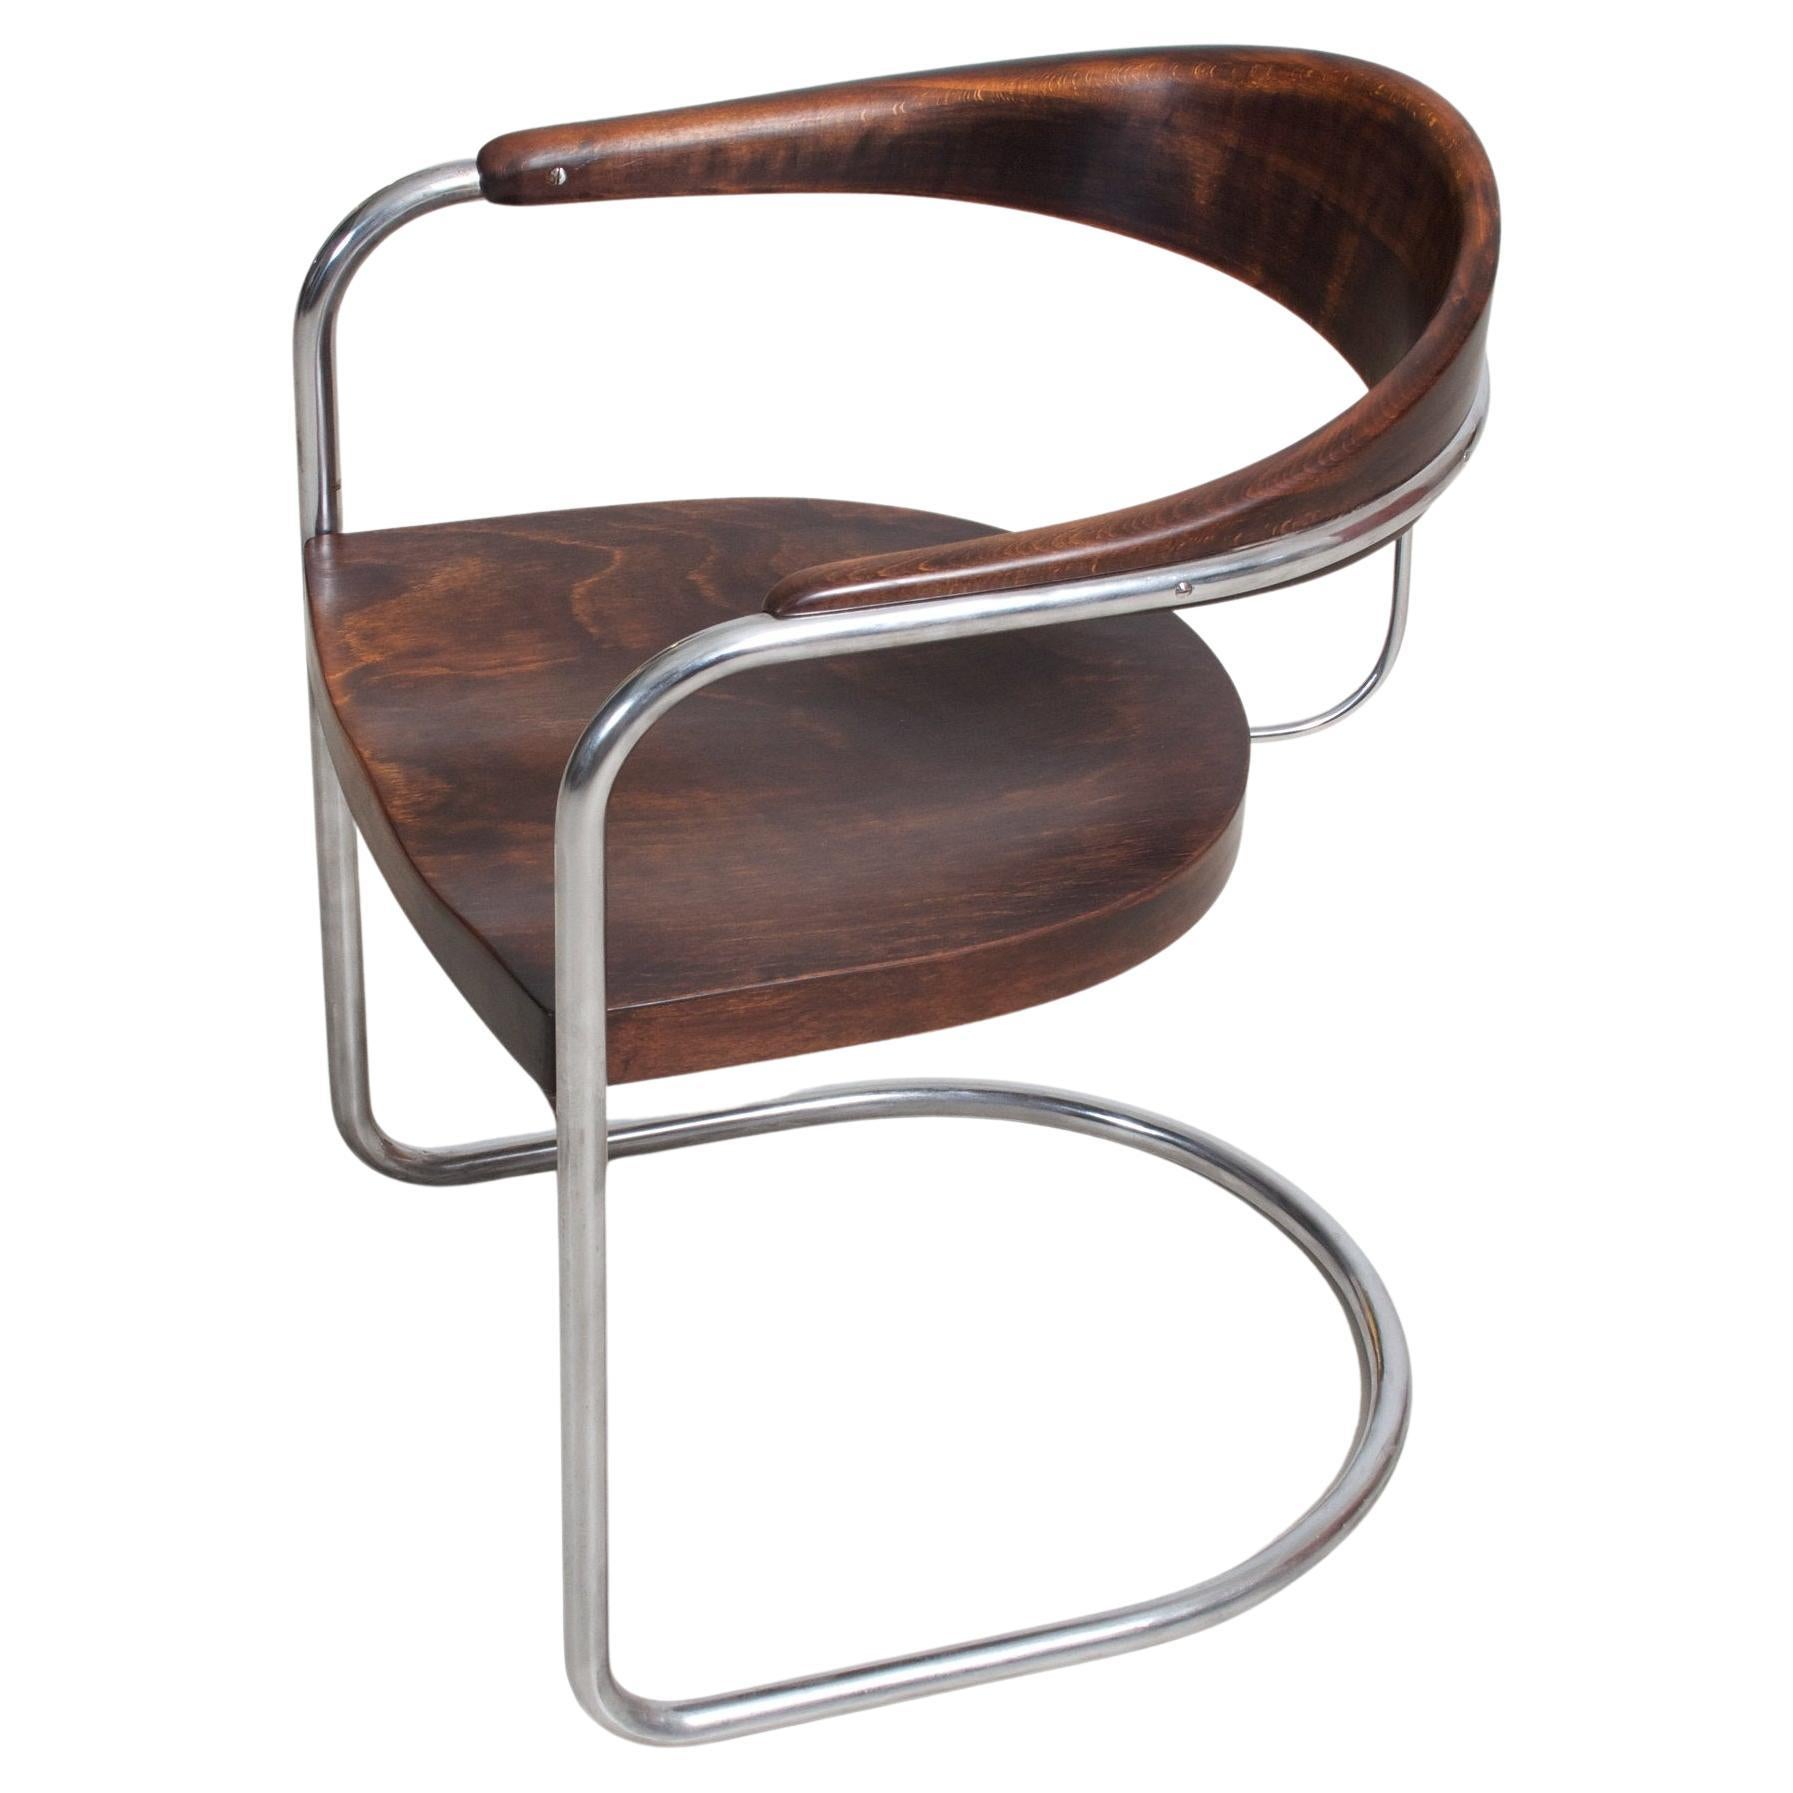 Freitragender Bauhaus-Sessel der Gebrüder Luckhardt, verchromtes Metall, gebeiztes Holz